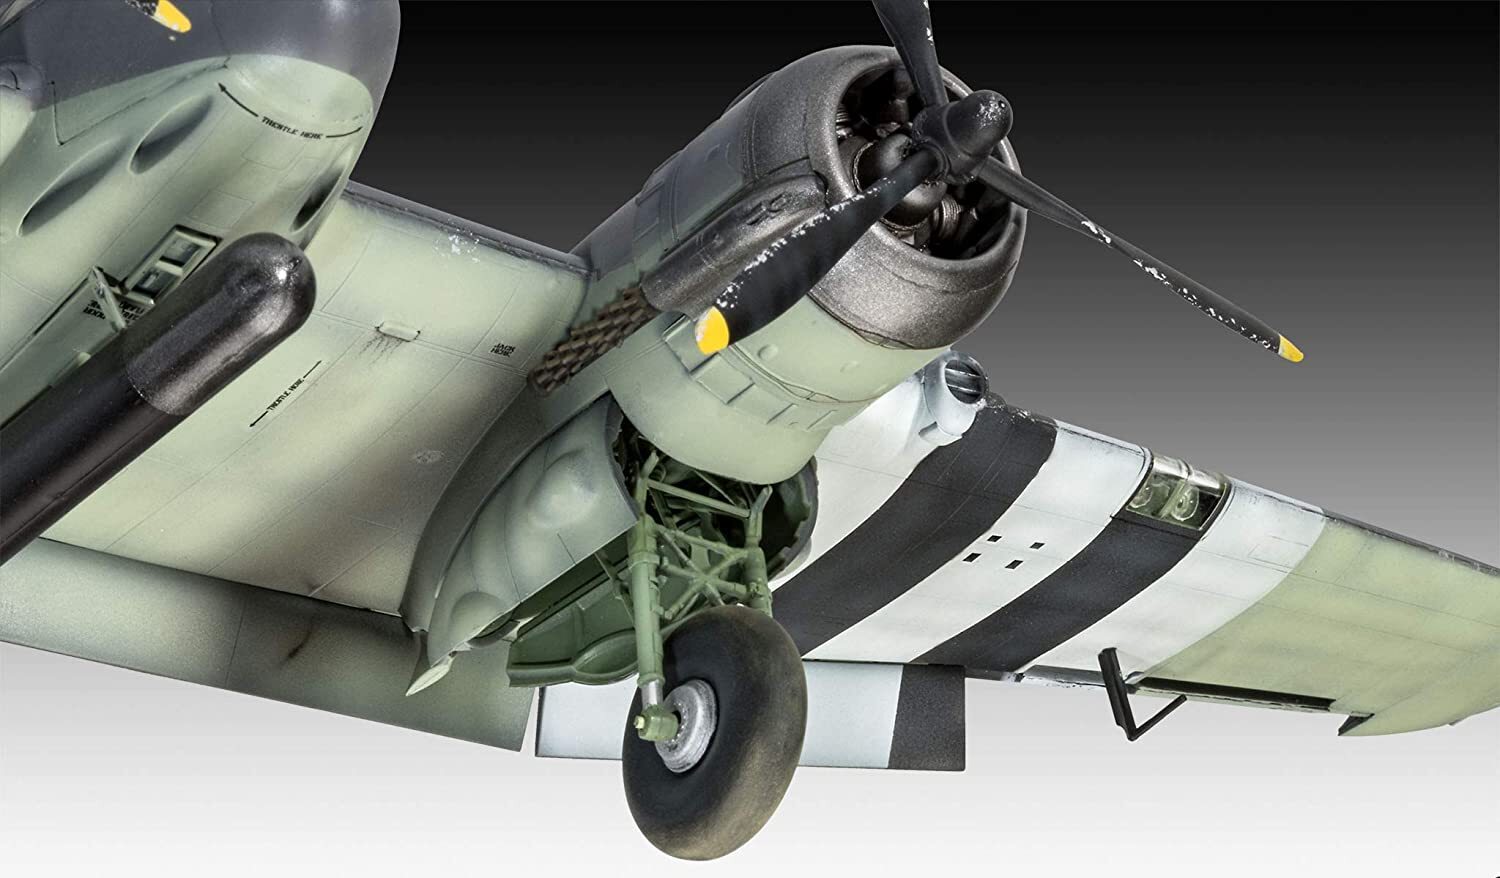 Revell REV-03943 14 Modelmaking Bristol Beaufighter TF. X